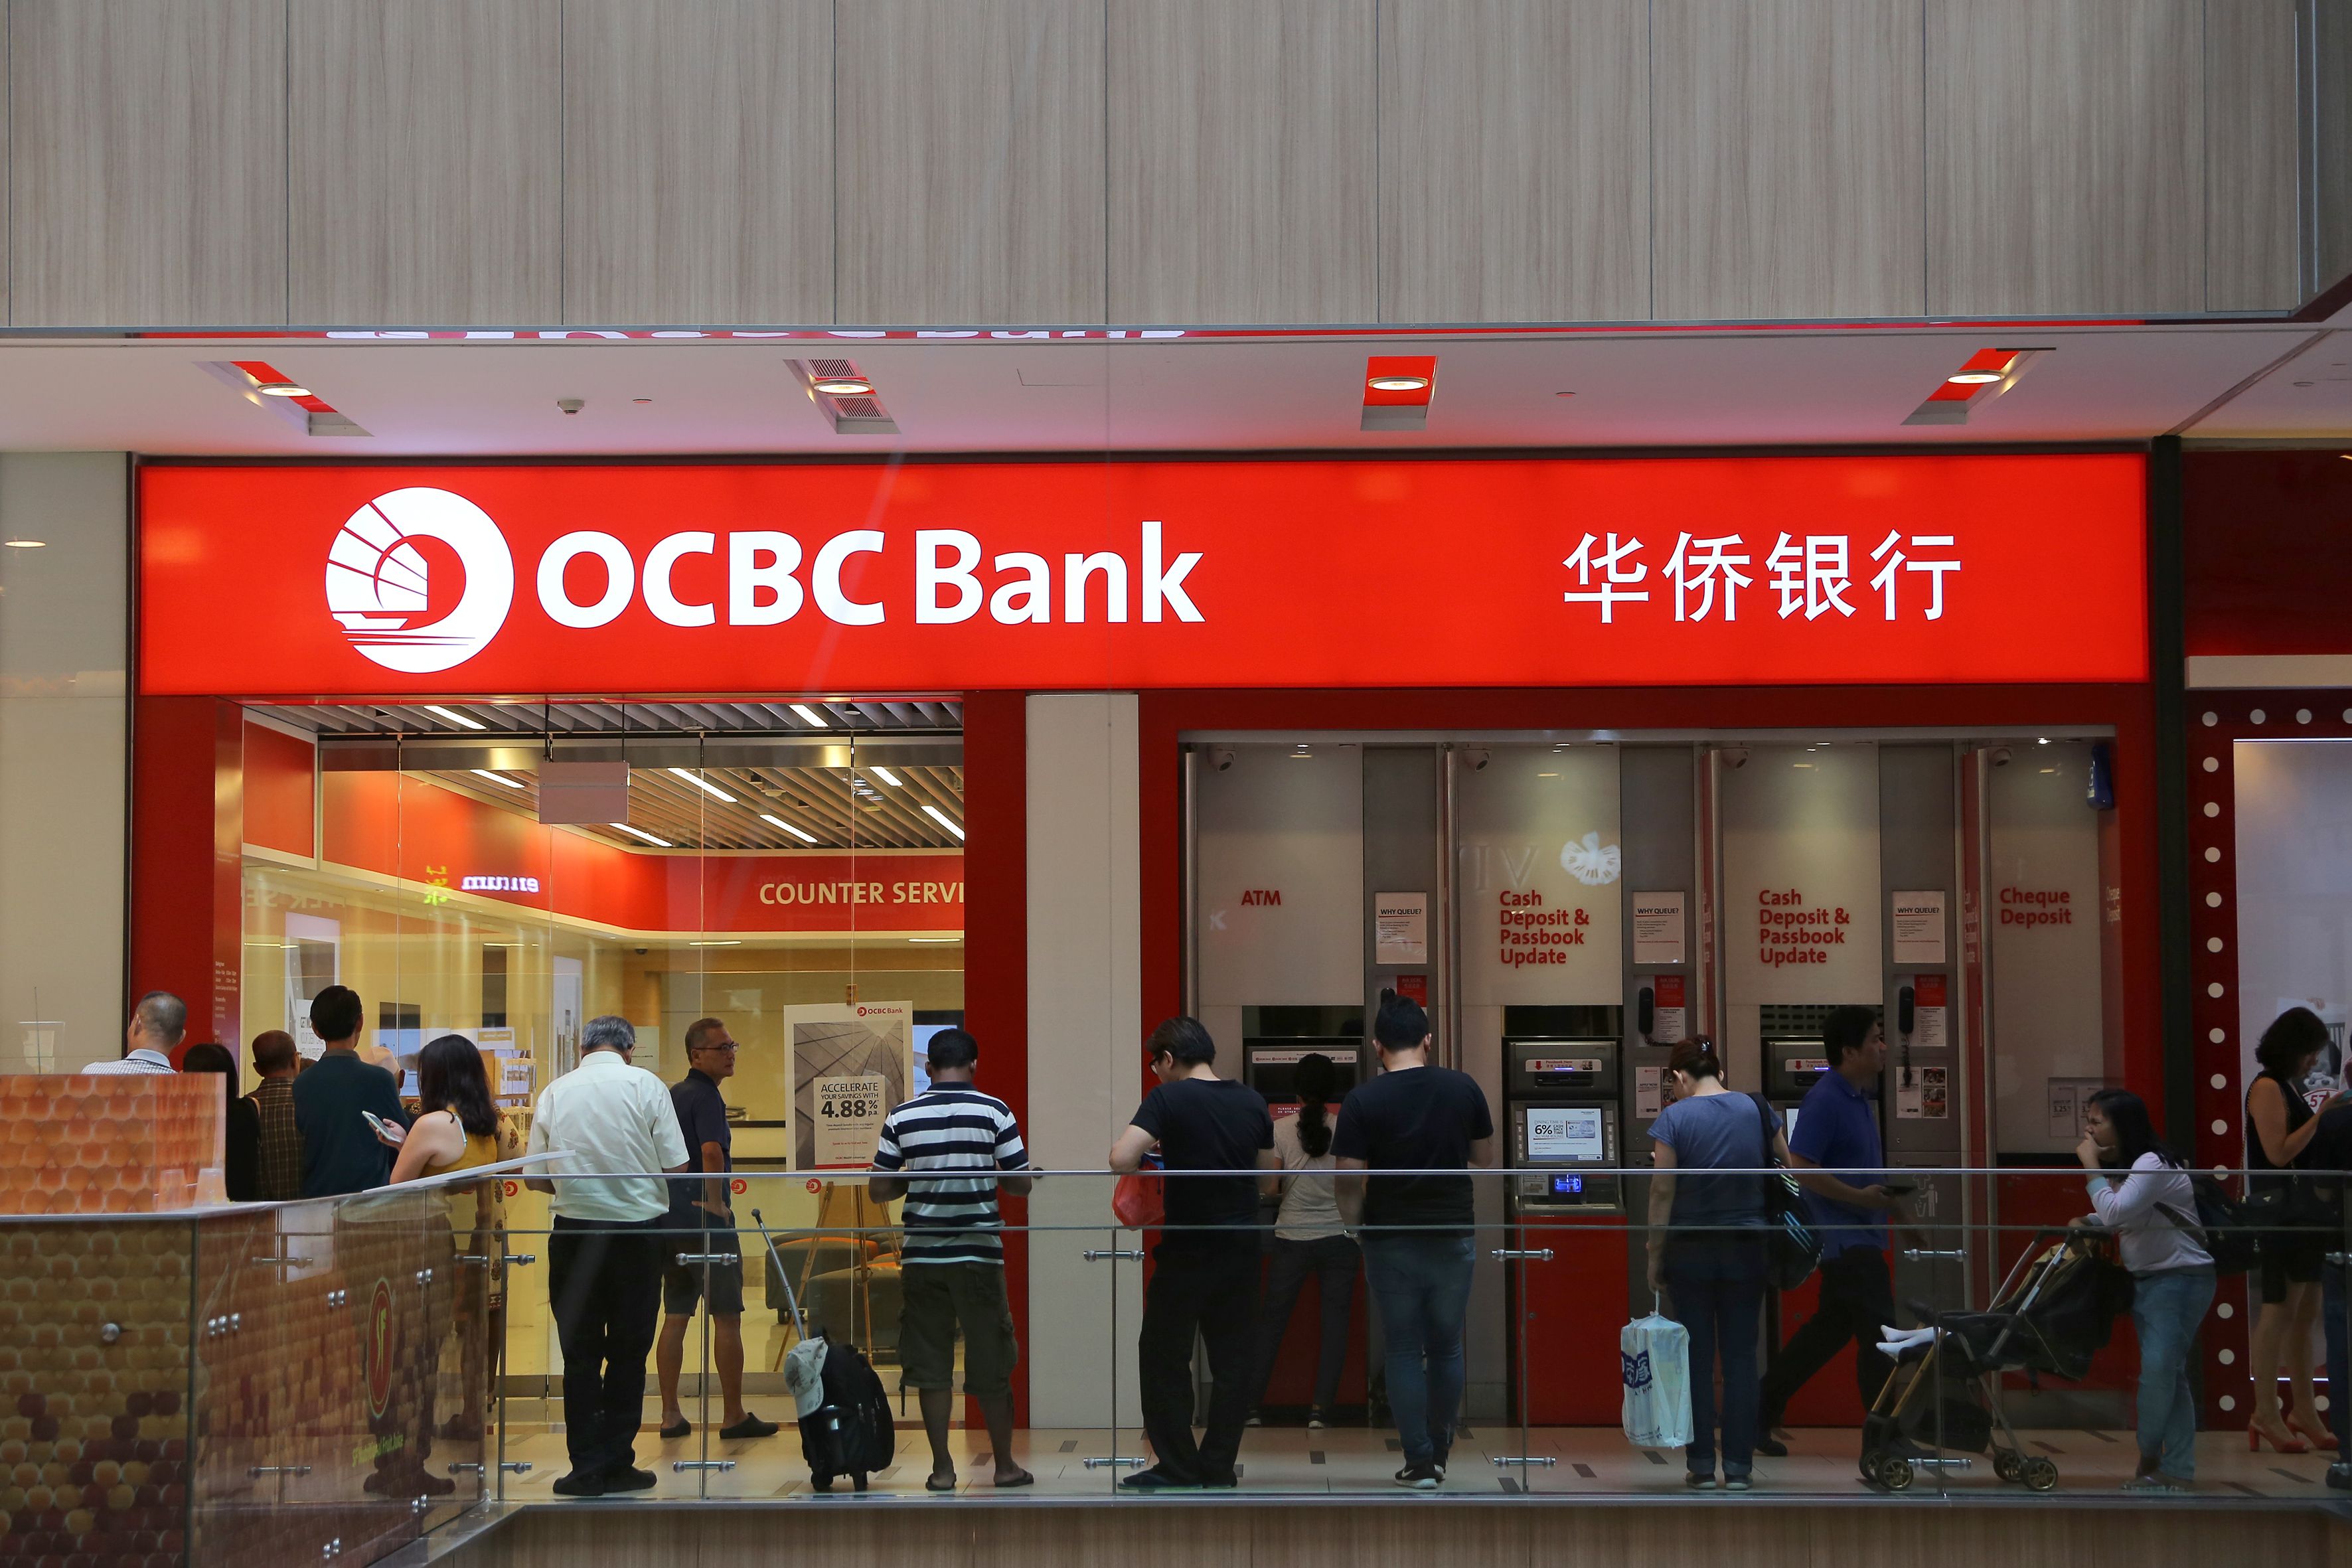 Units bank. OCBC Bank Singapore. Oversea-Chinese Banking Corporation Limited. Банка OCBC Сингапур. Банк Китая внутри.